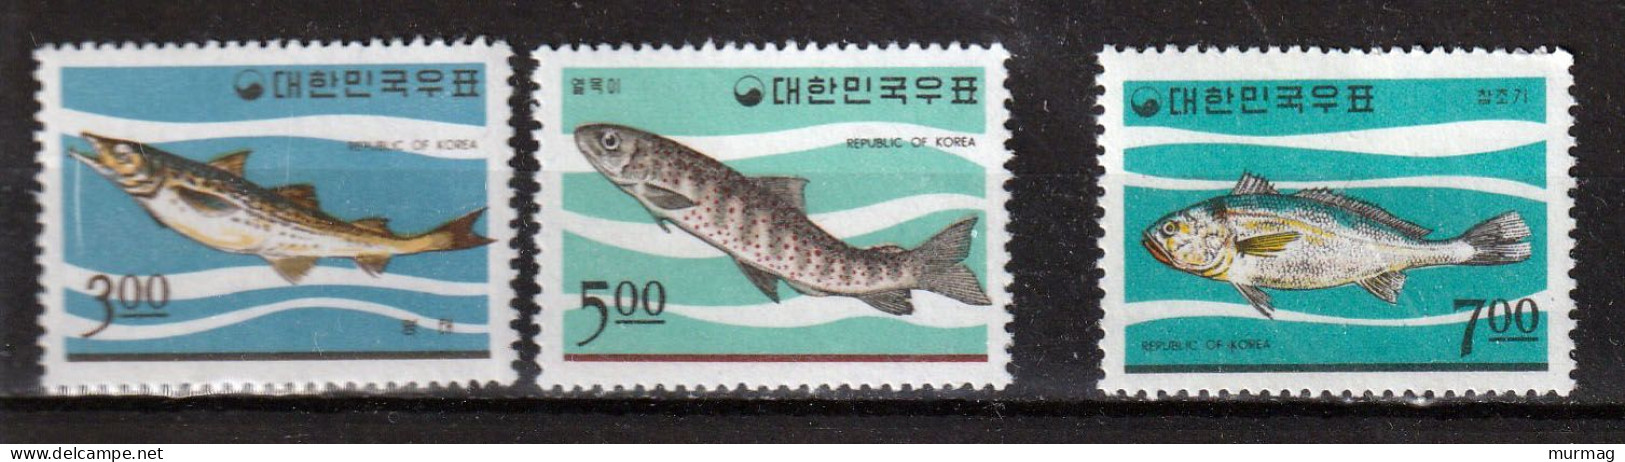 COREE DU SUD - Faune Marine, Poissons - Y&T N° 417-419 - 1966 - MNH - Korea, South